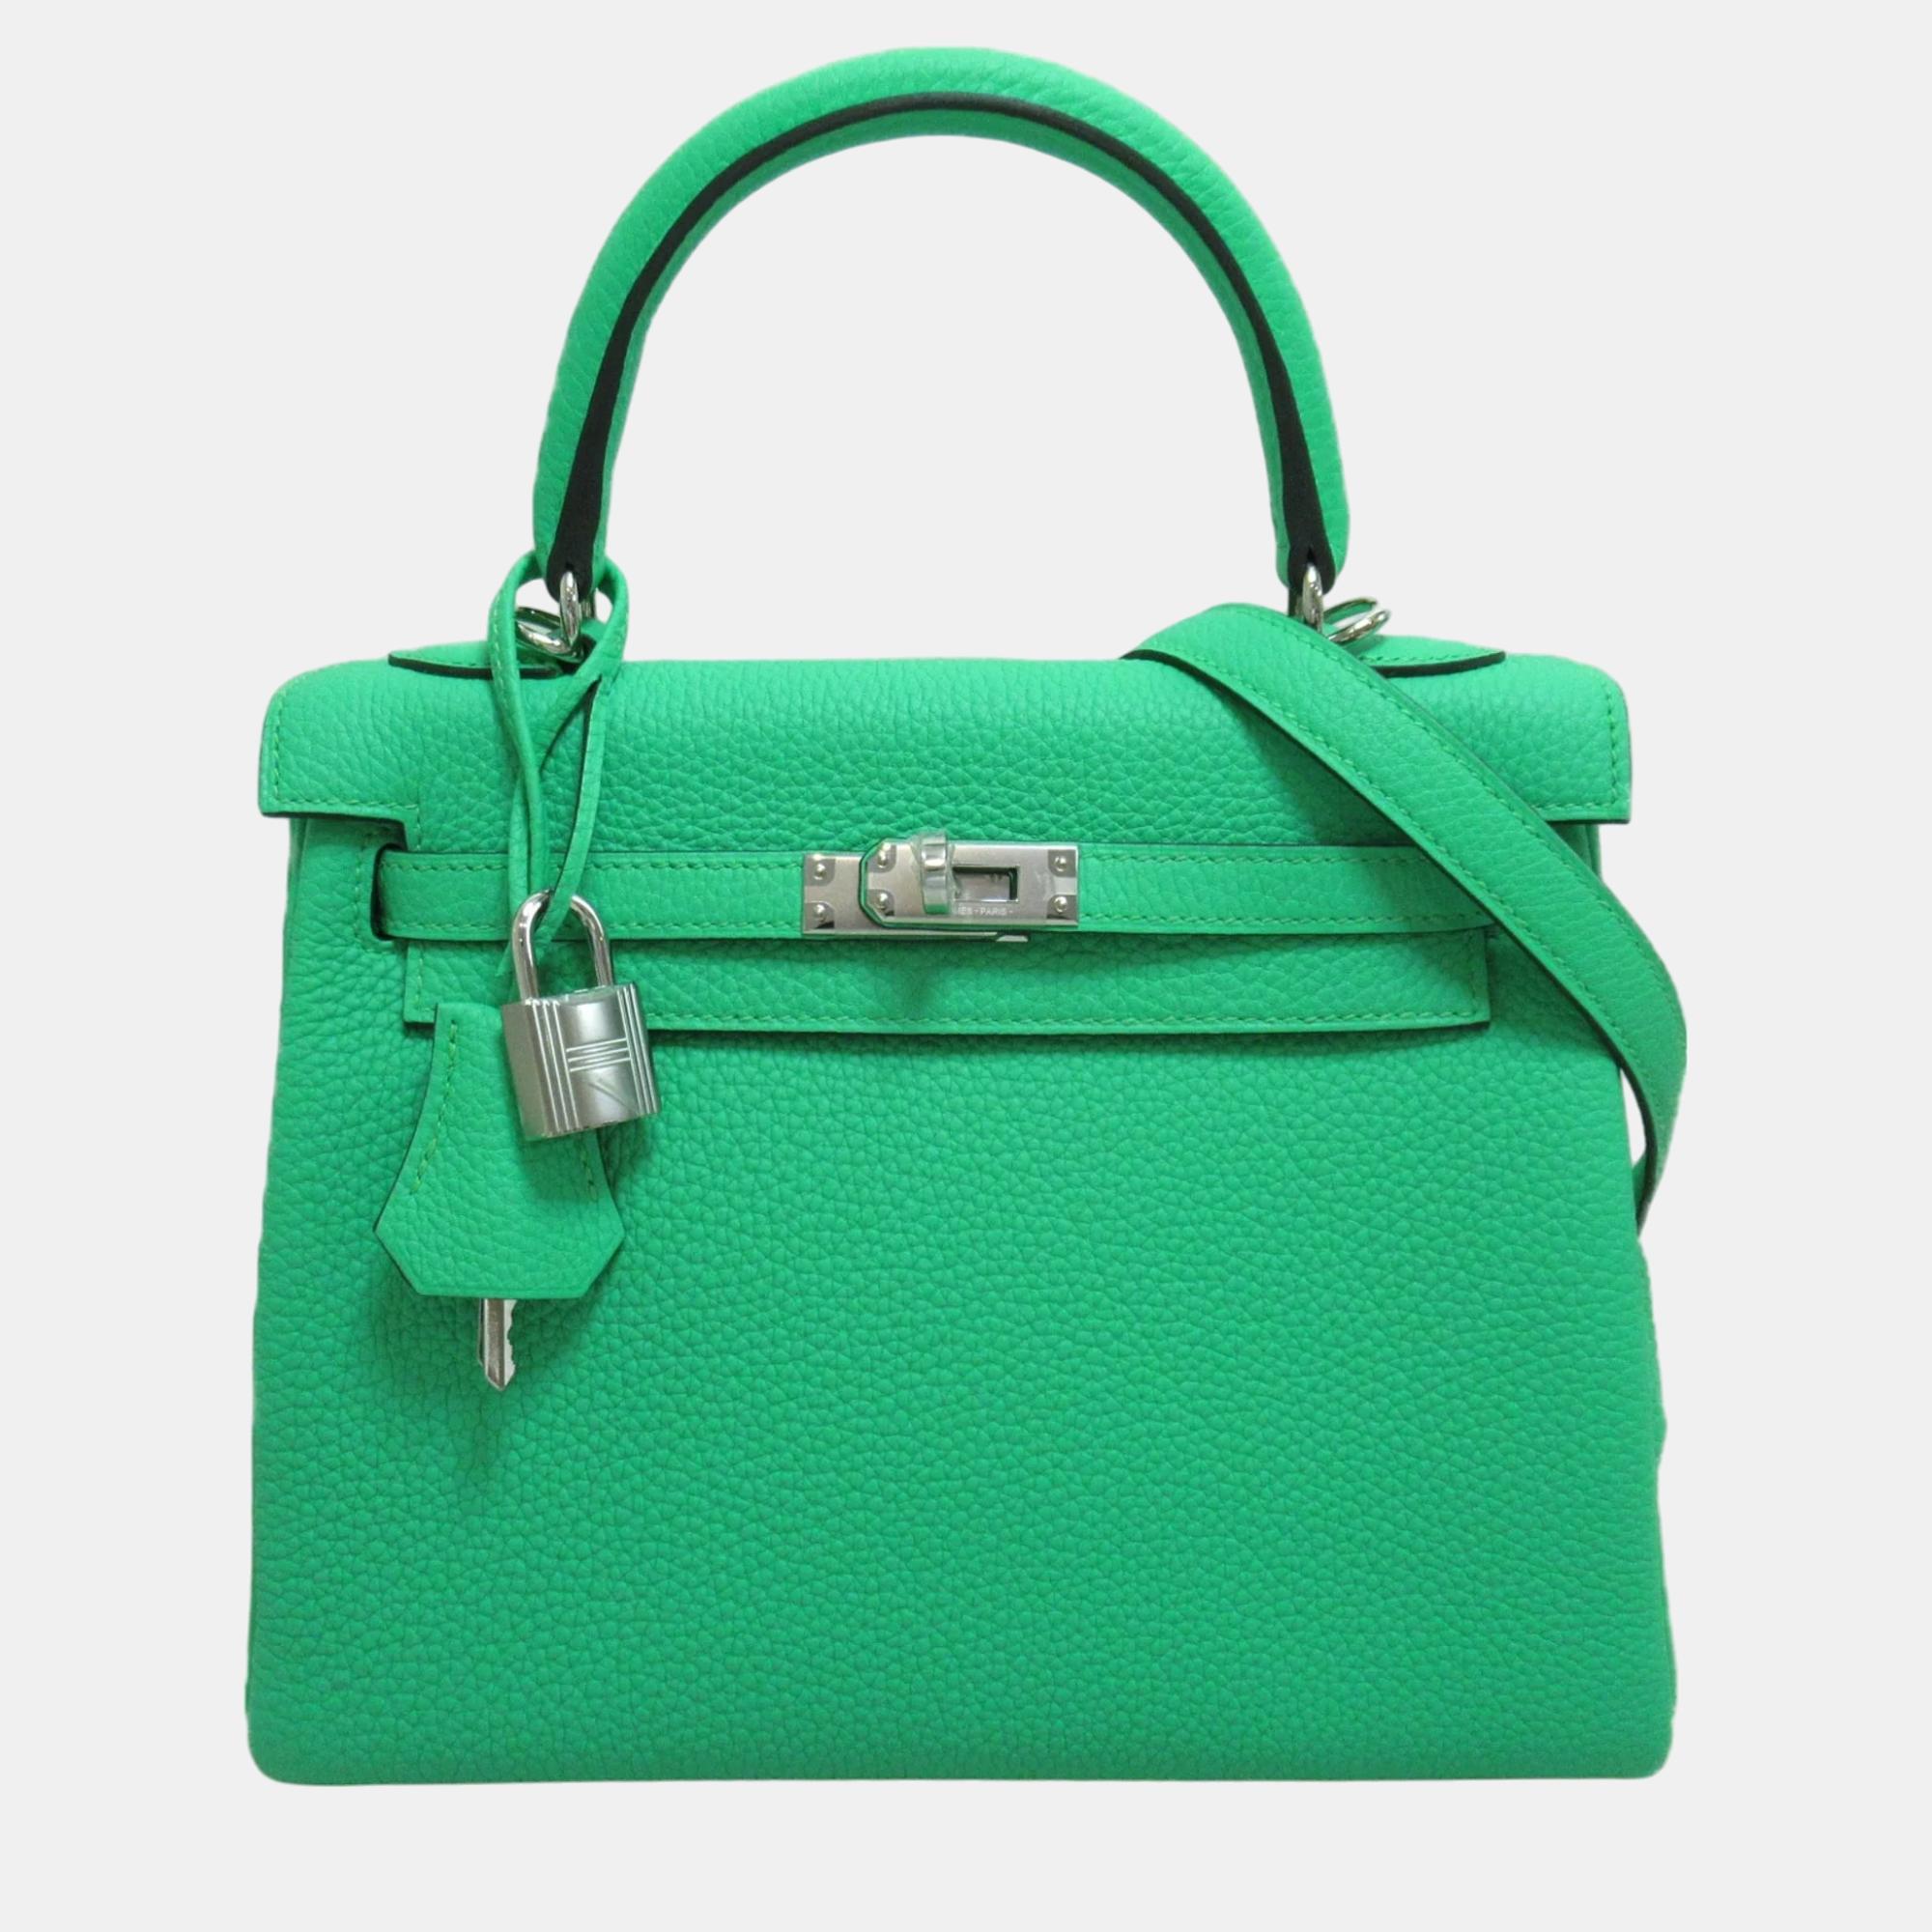 Hermes green taurillon clemence leather kelly handbag